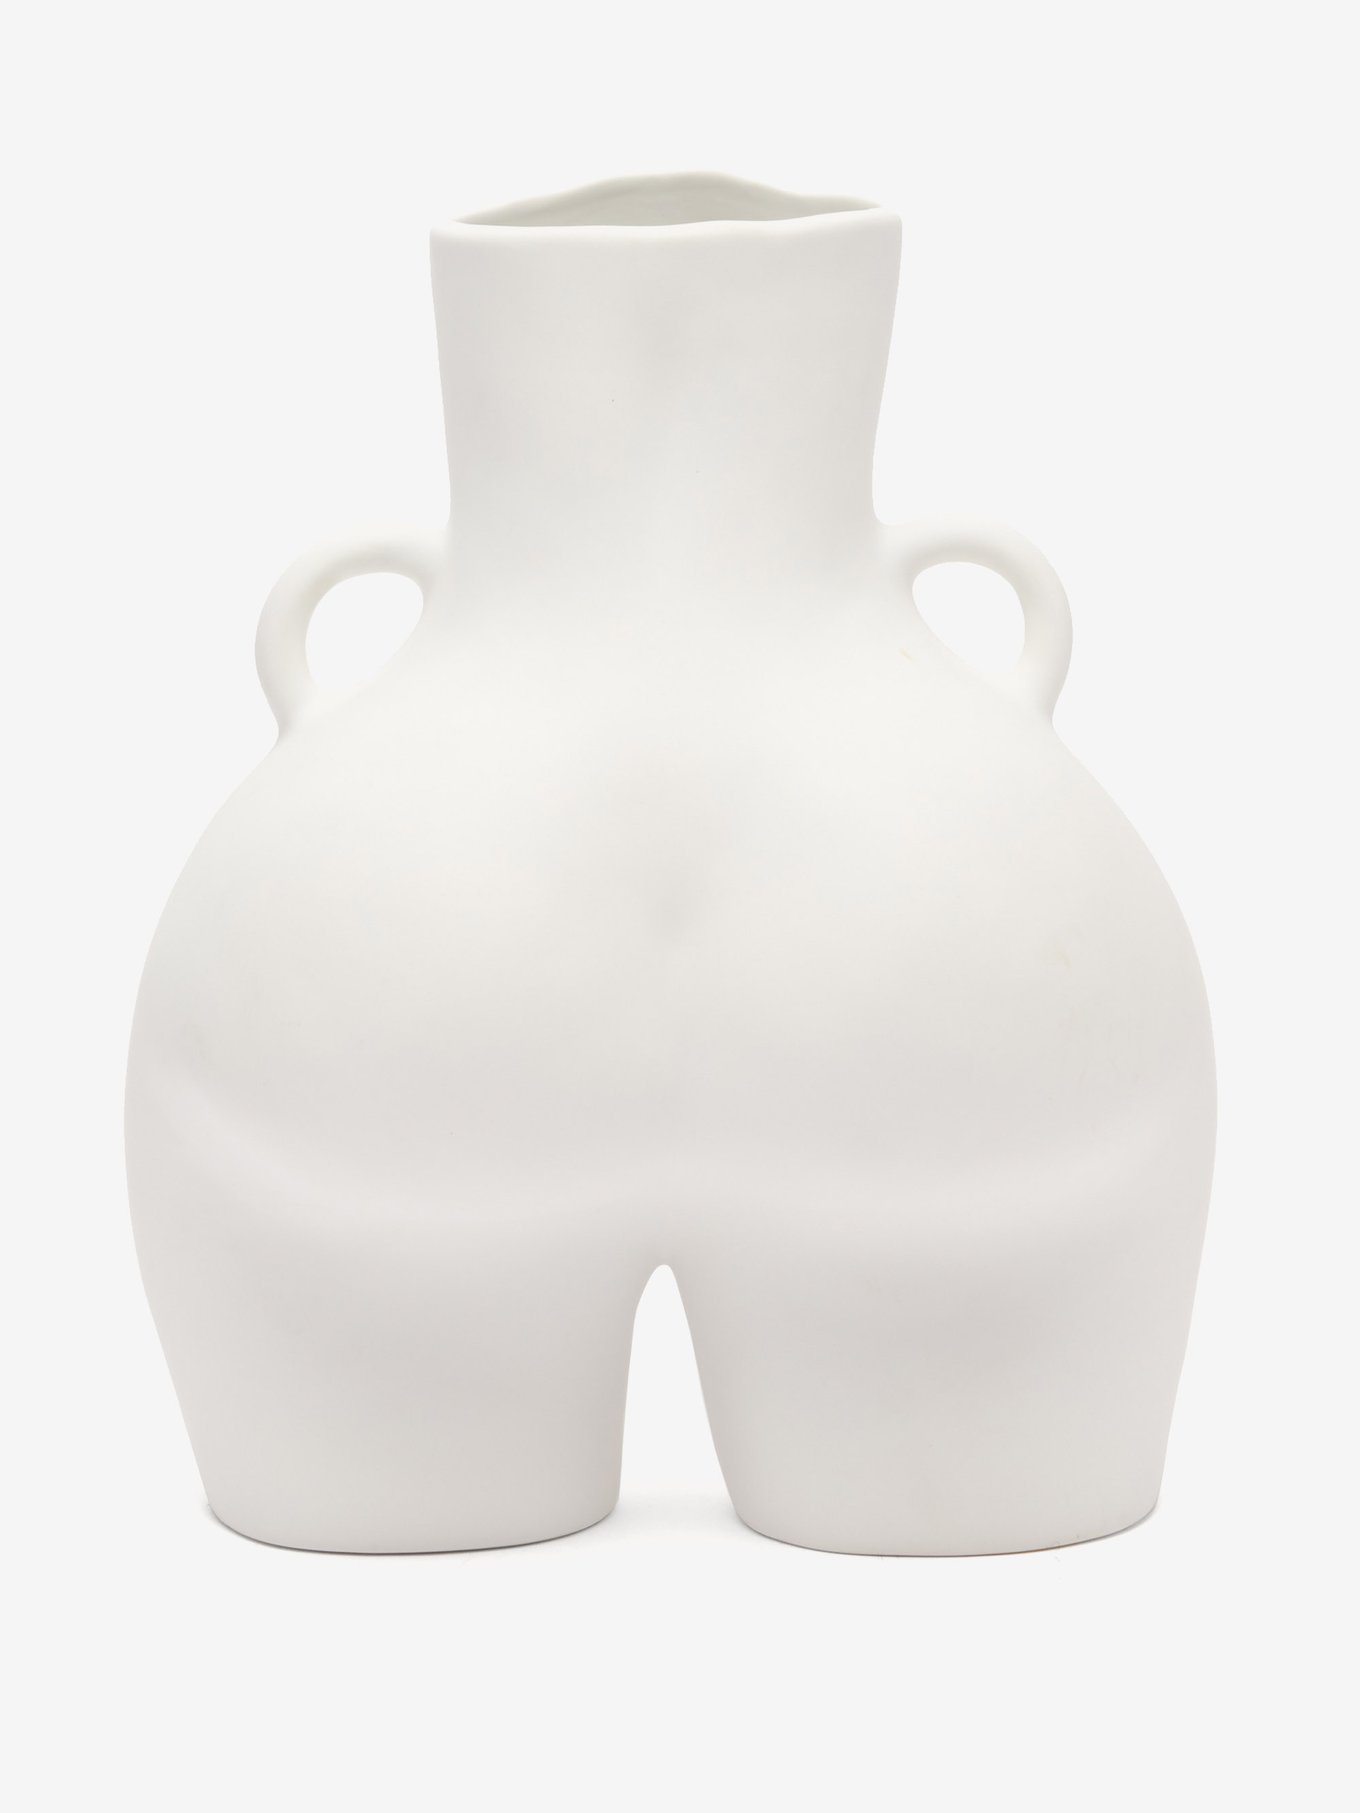 Love Handles ceramic vase | Anissa Kermiche